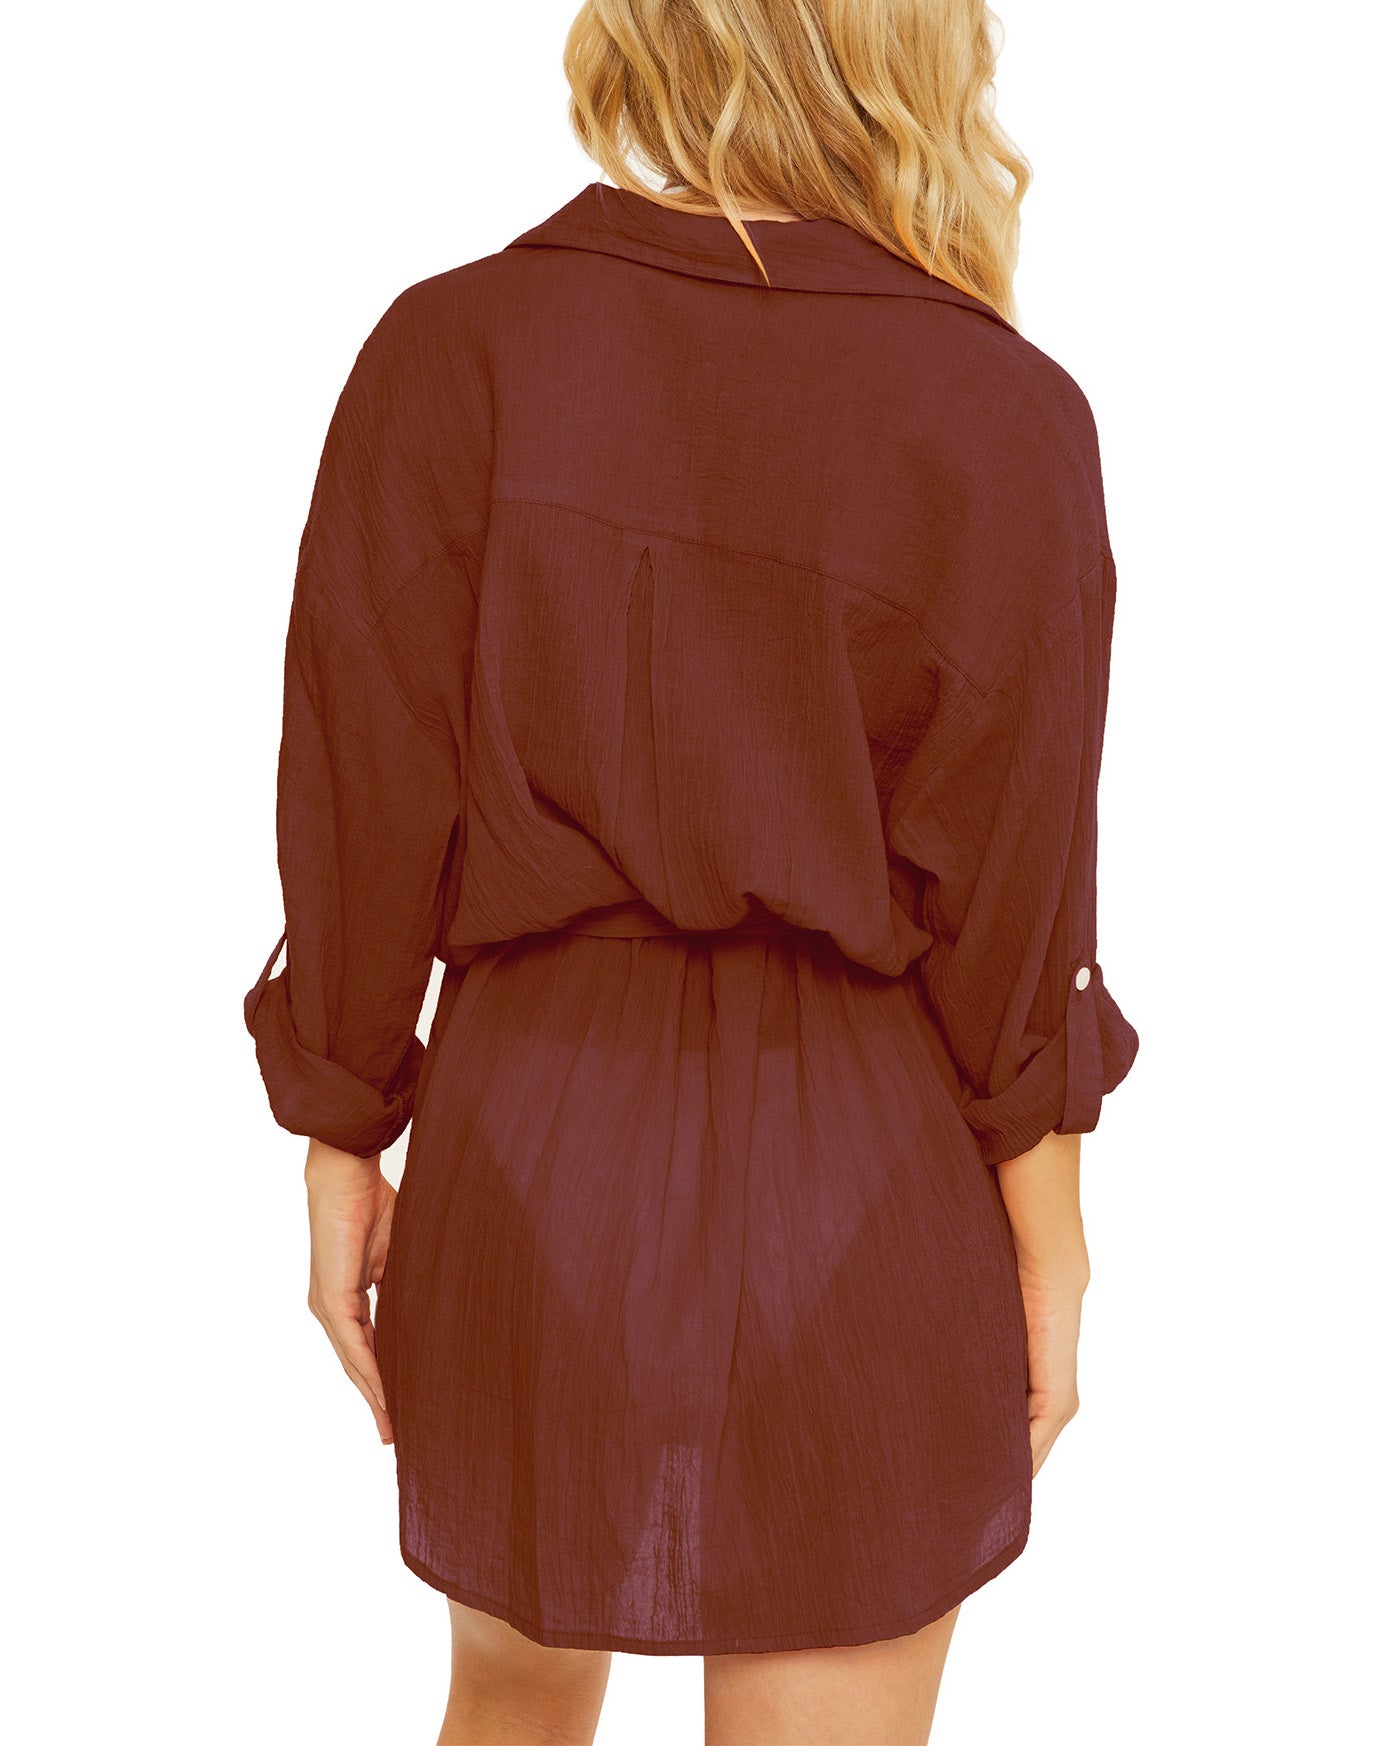 Model wearing a gauzy button up shirt dress in maroon